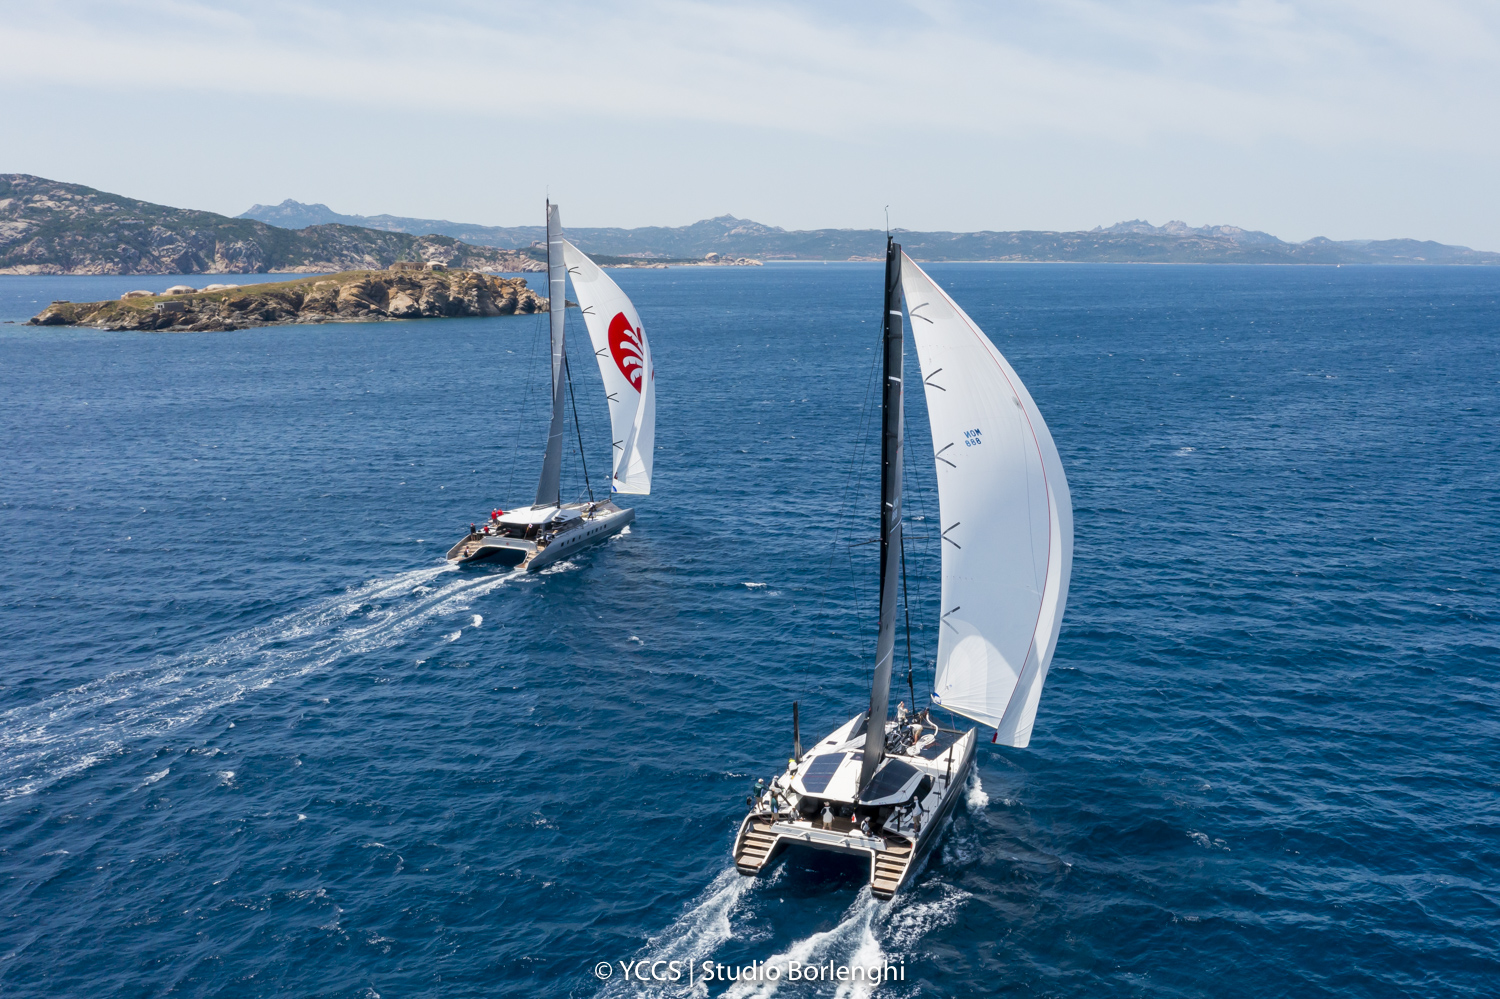 Loro Piana Superyacht Regatta, La Maddalena Archipelago serves up third day of superb sailing - Press Release - Yacht Club Costa Smeralda